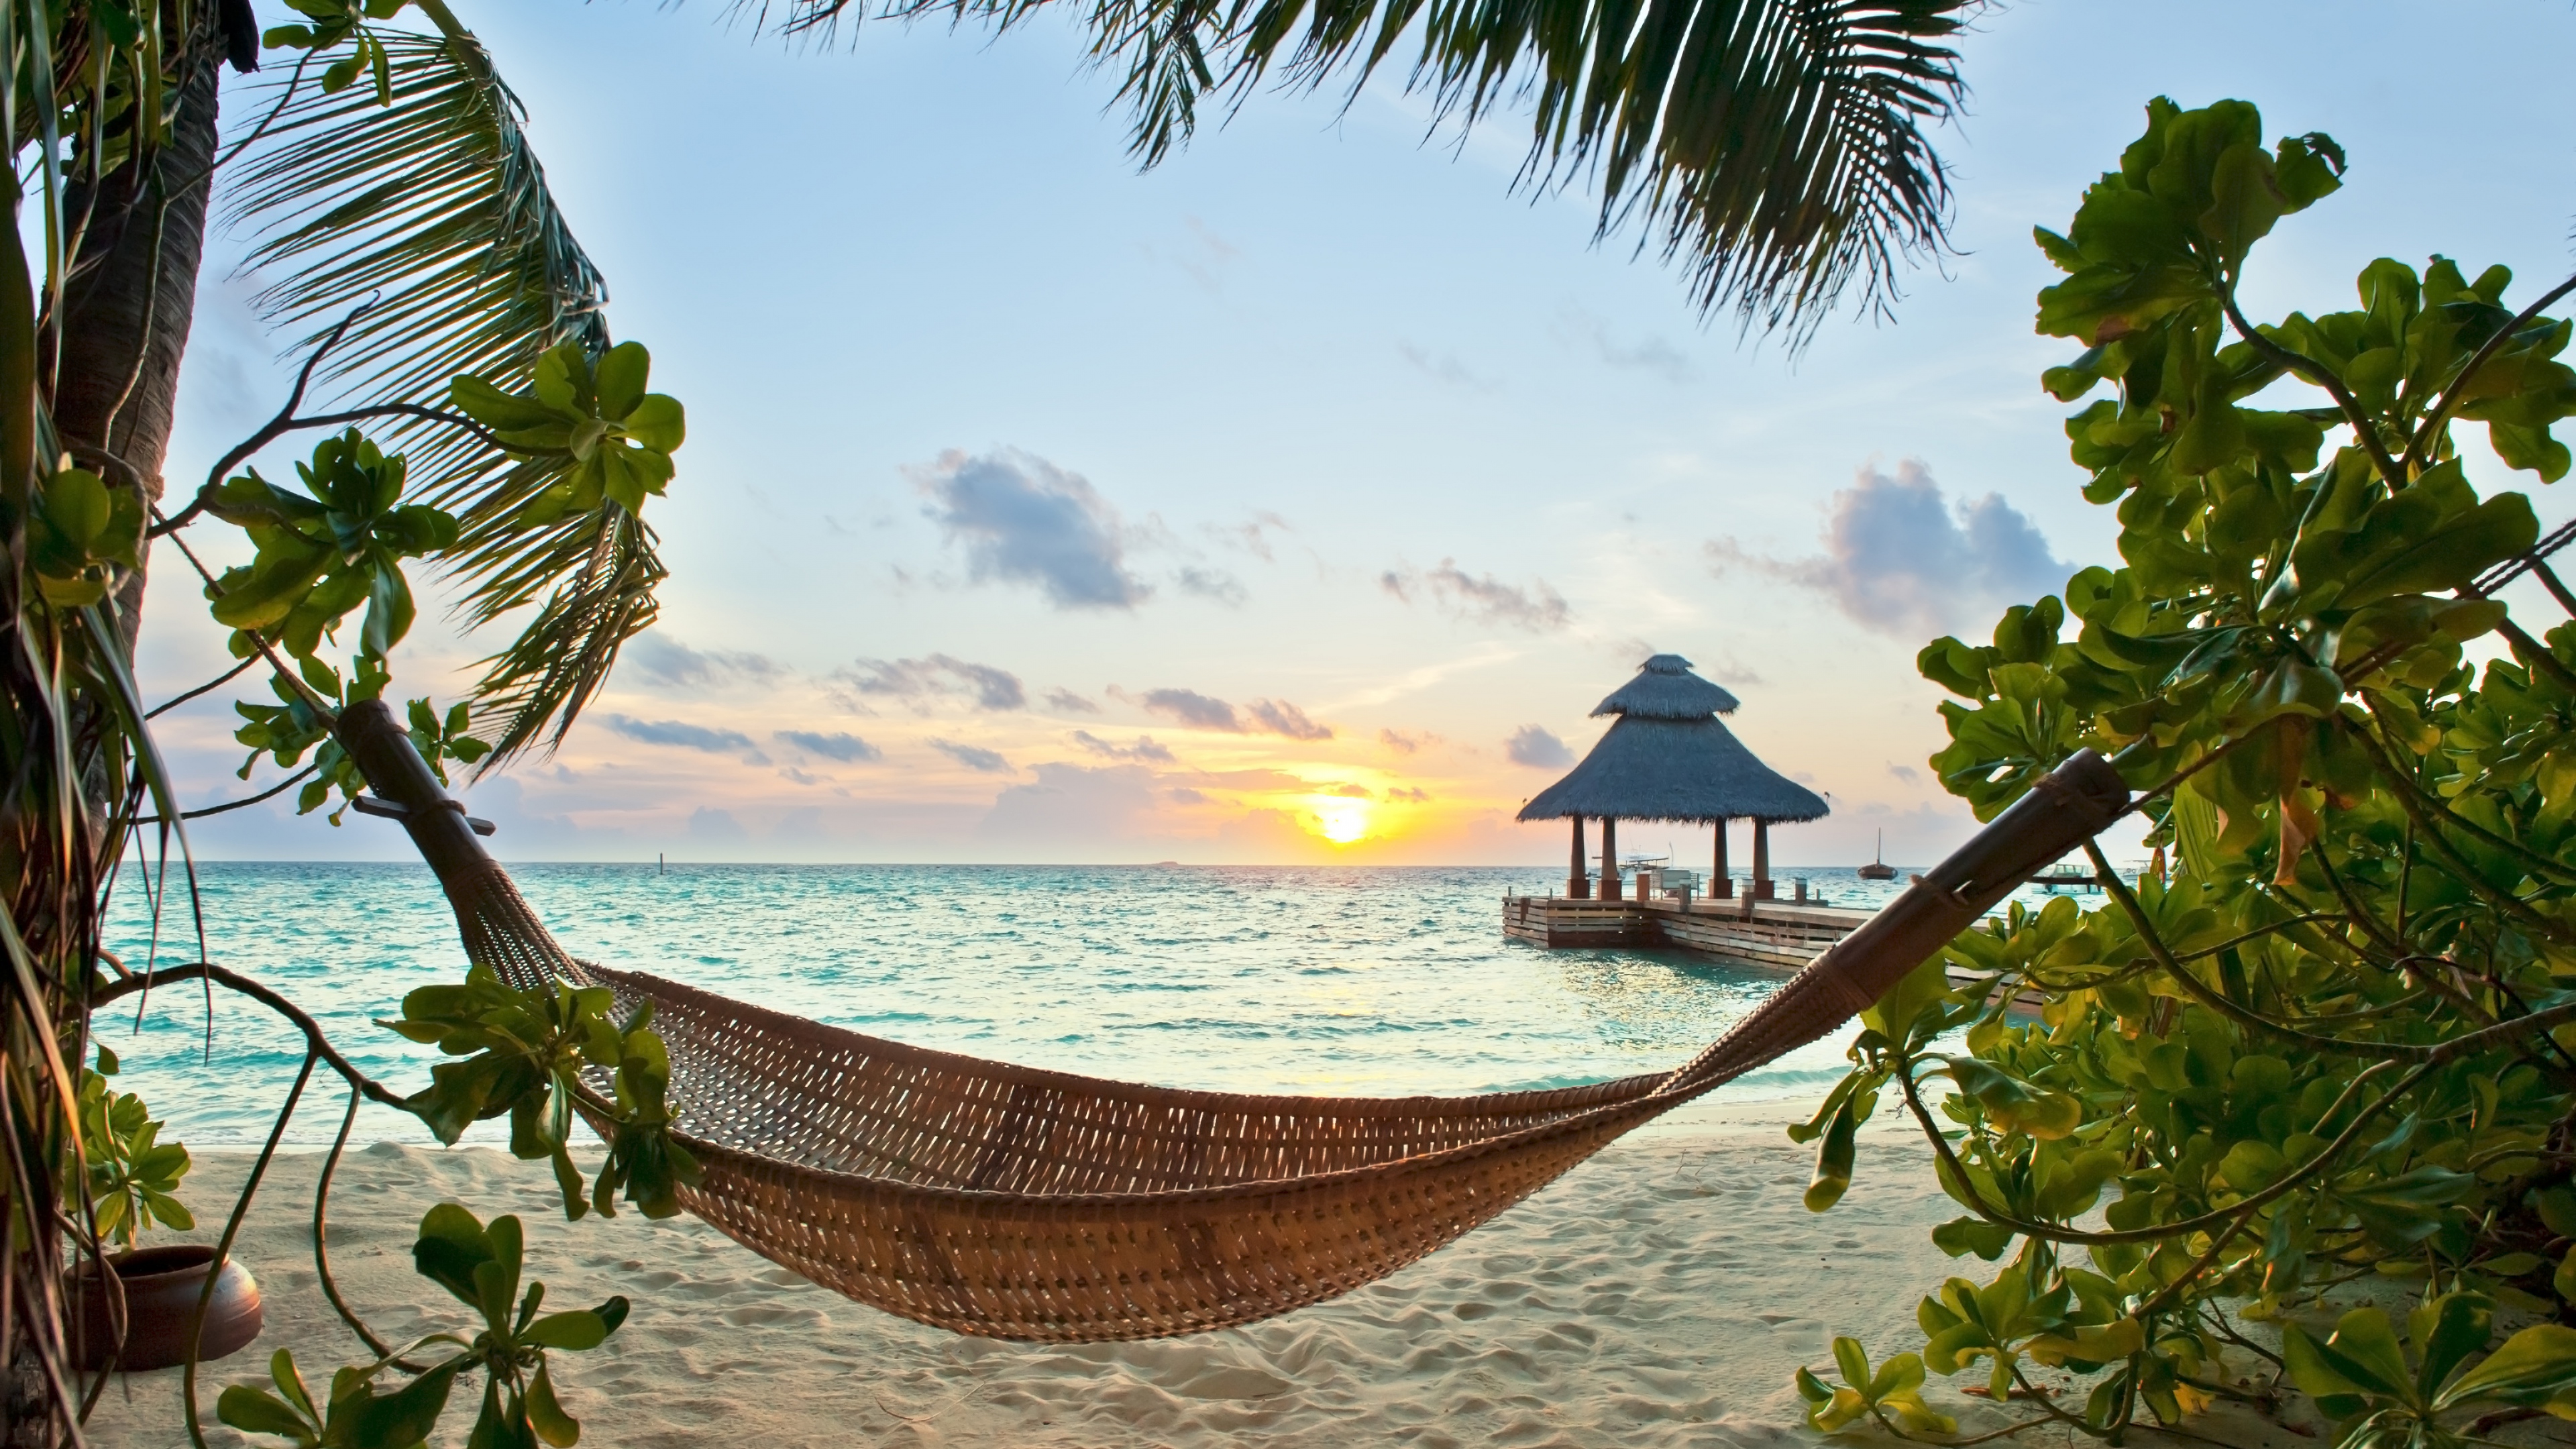 sea, man made, hammock, beach, sunset, tropics